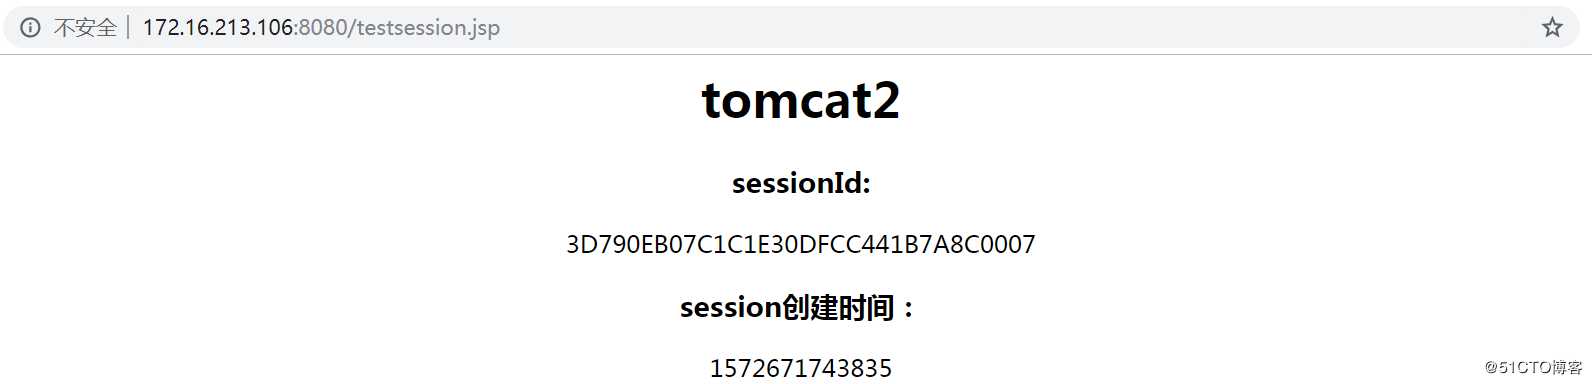 #IT明星不是梦#nginx+tomcat集群redis共享session方案实战案例